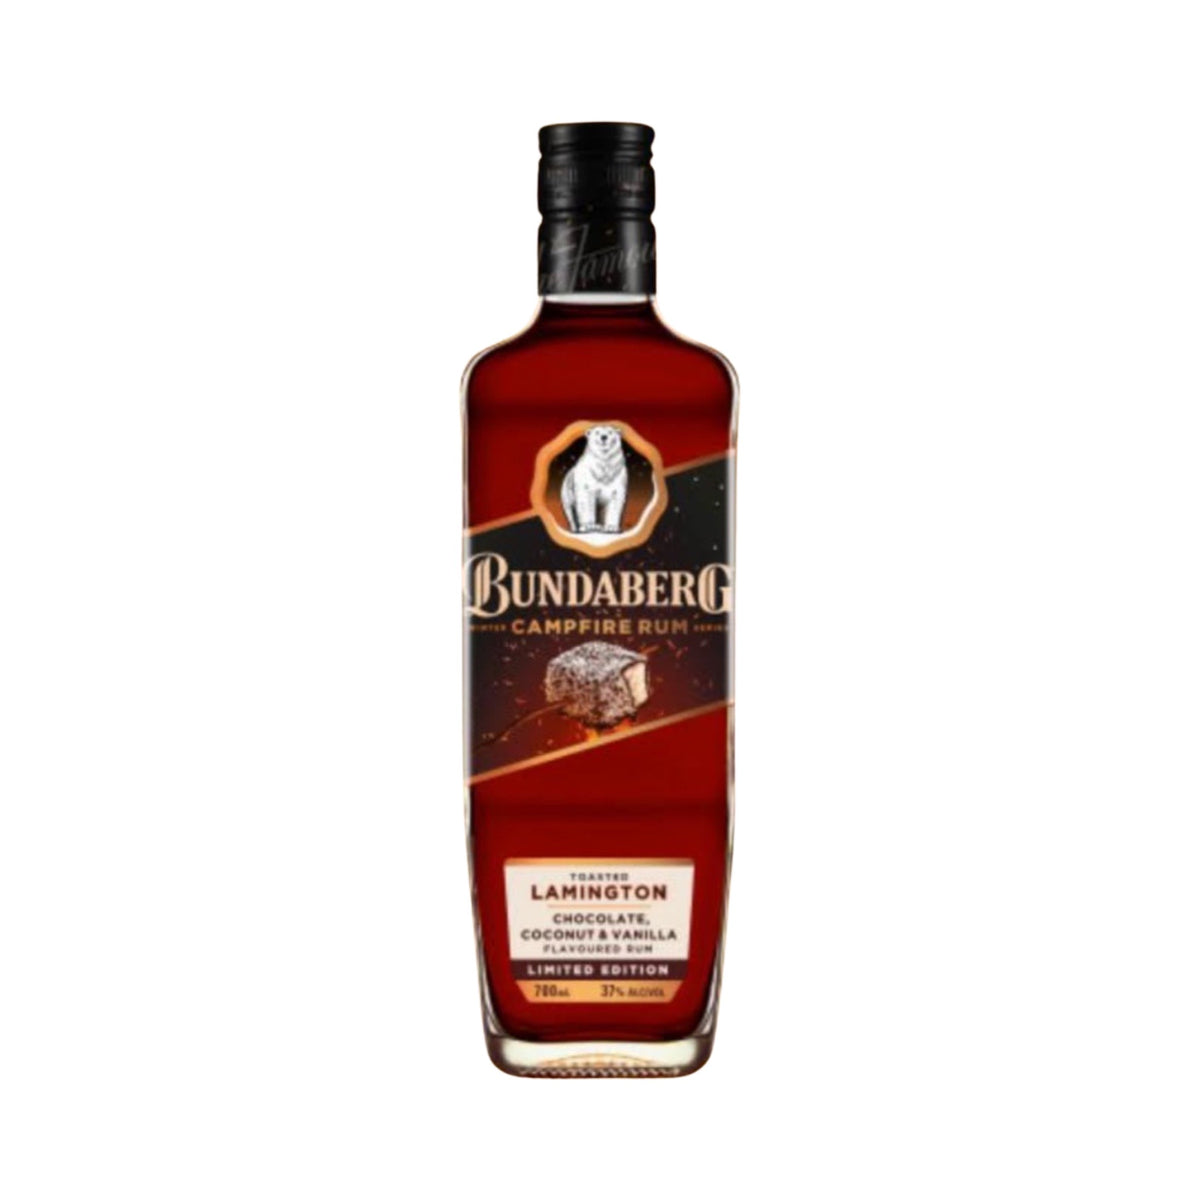 Bundaberg Campfire Toasted Lamington Limited Edition Rum 700ml